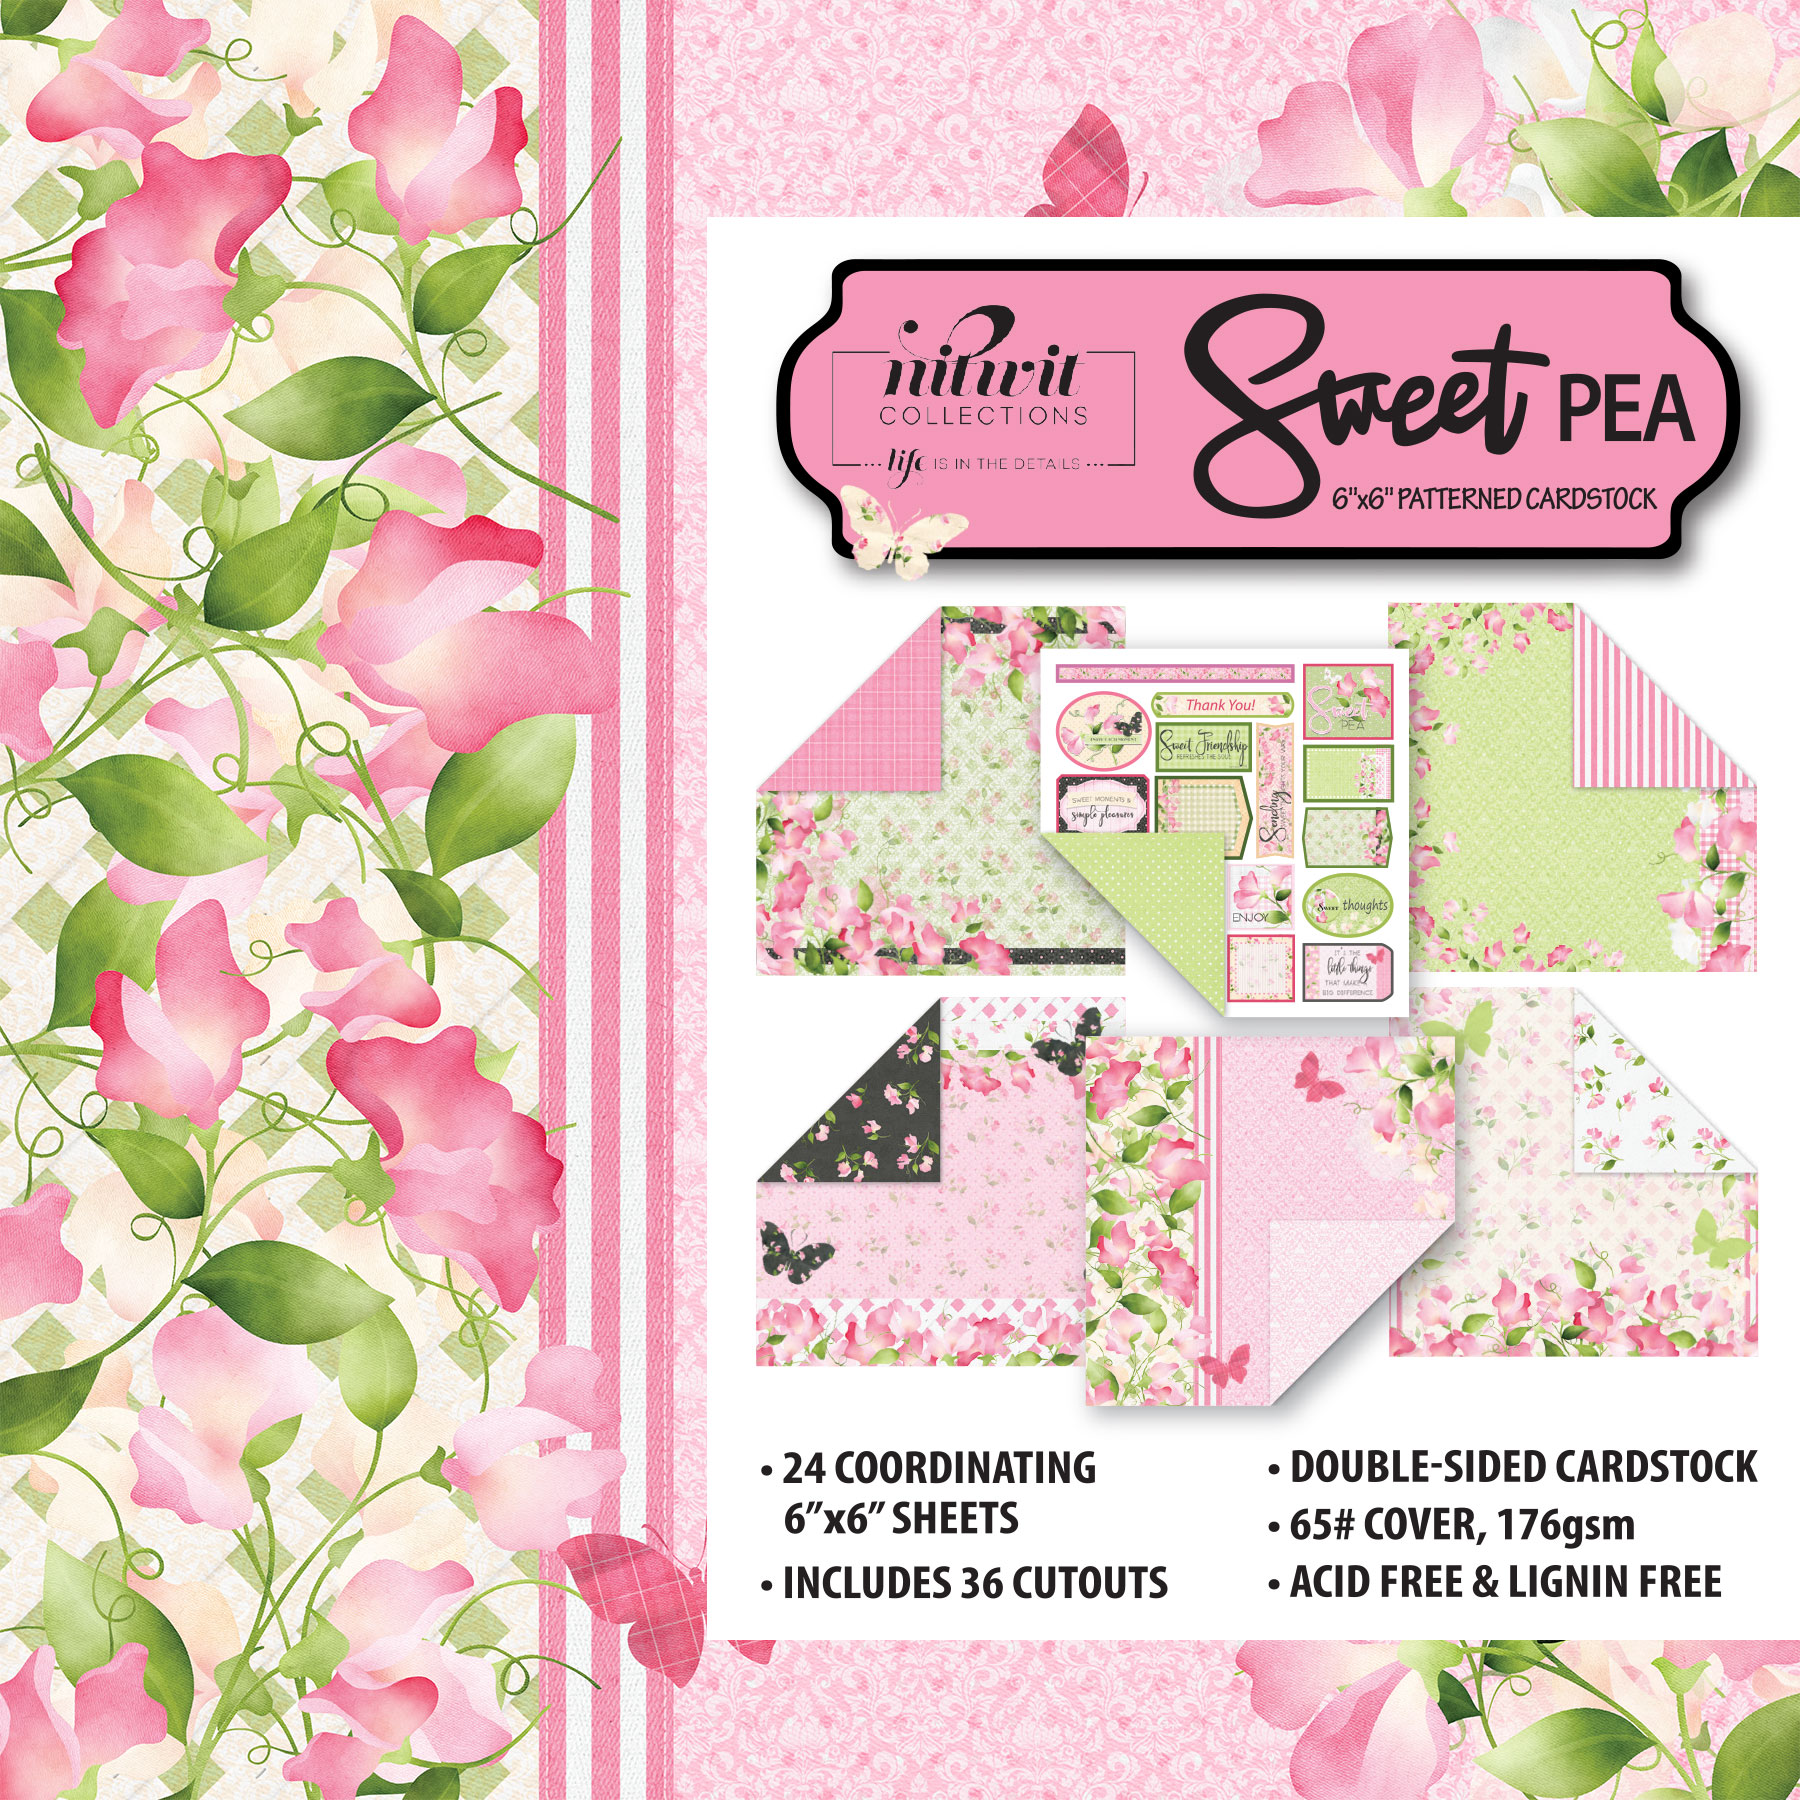 Sweet Pea 6"x6"" Patterned Cardstock Pack